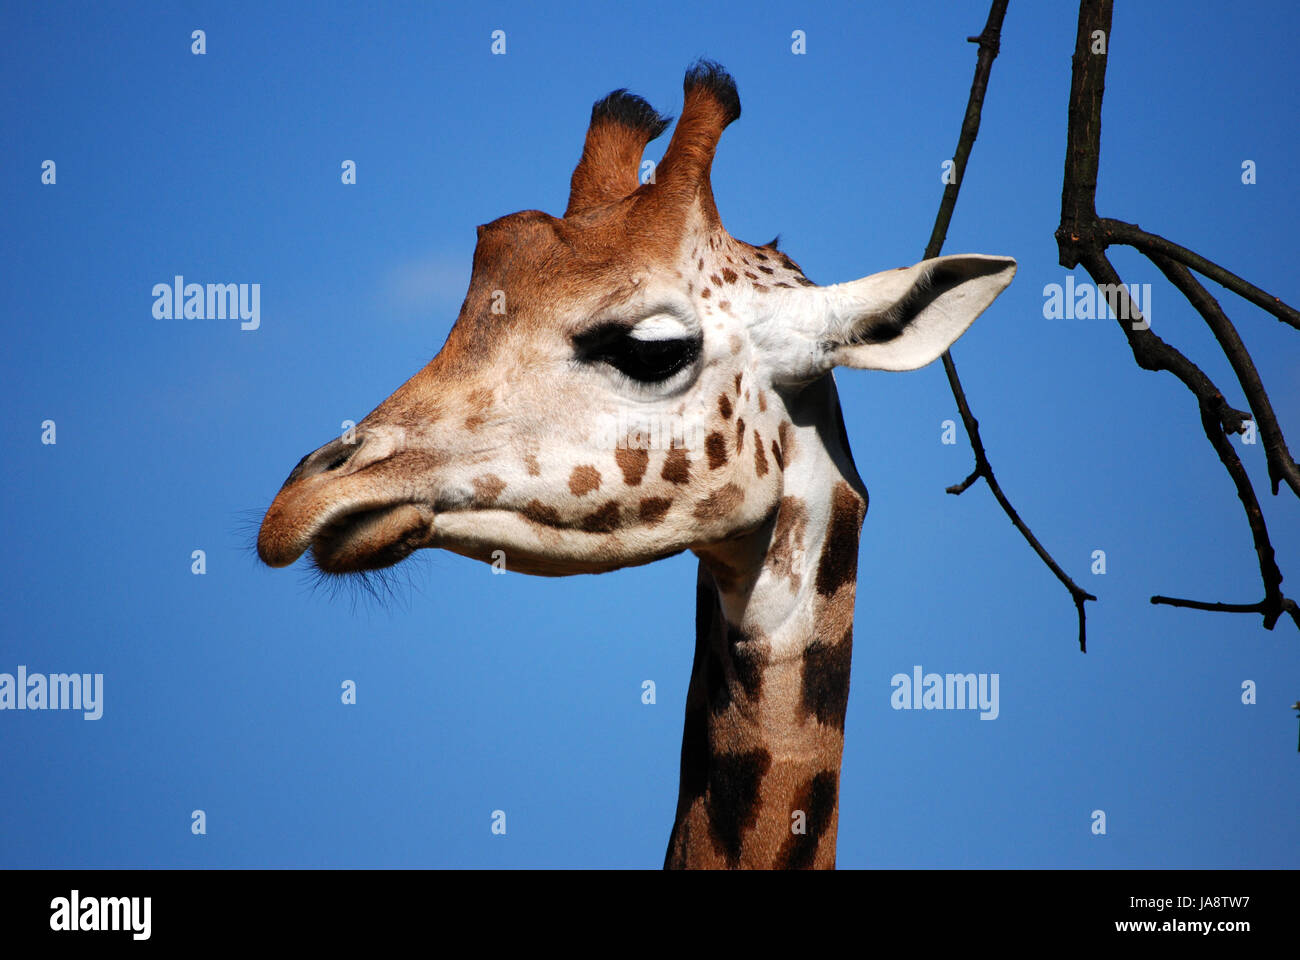 mammal, zoo, long, giraffe, ruminant, horns, gentle, wild animal, neck, high, Stock Photo